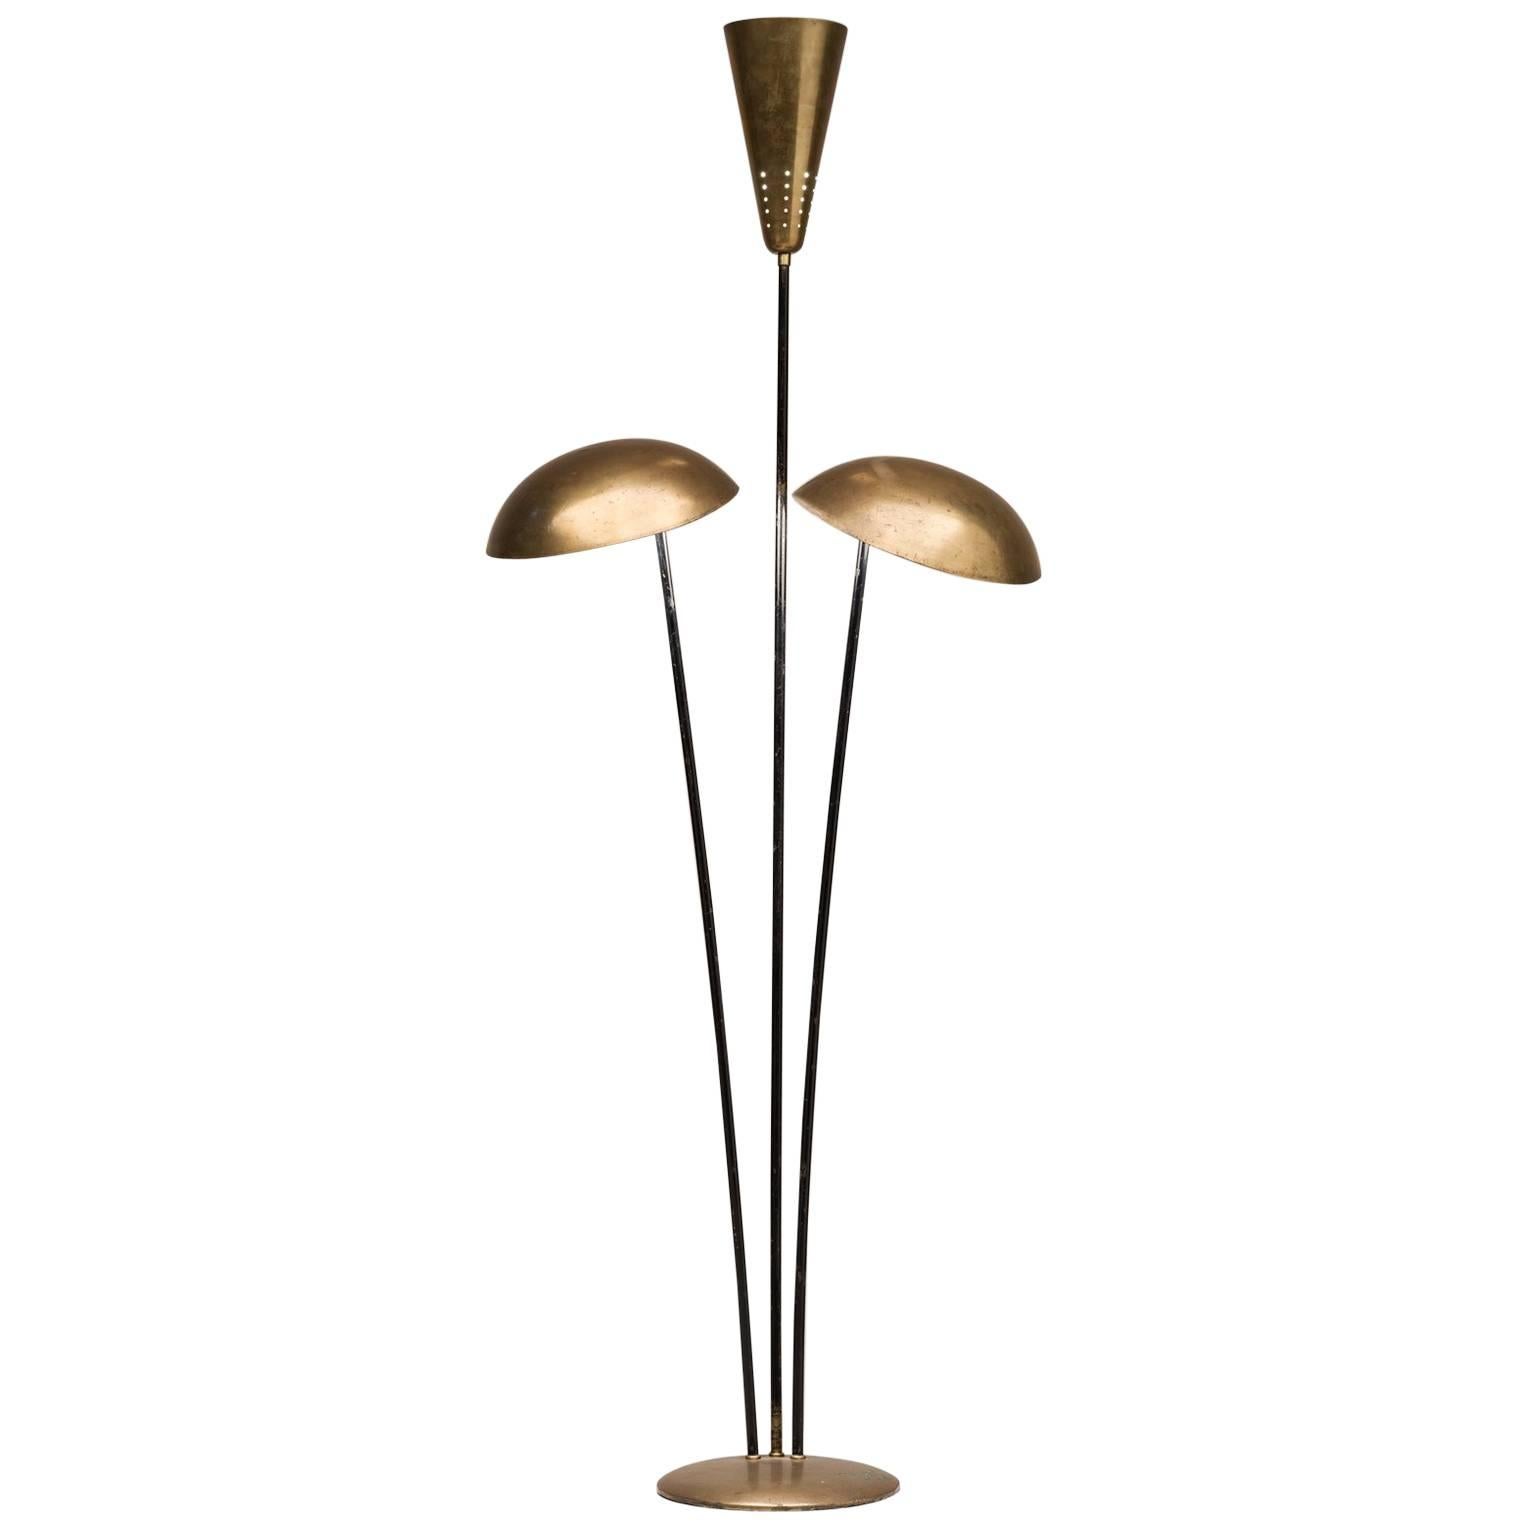 'Gala' by Hildegard Liertz Brass Floor Lamp